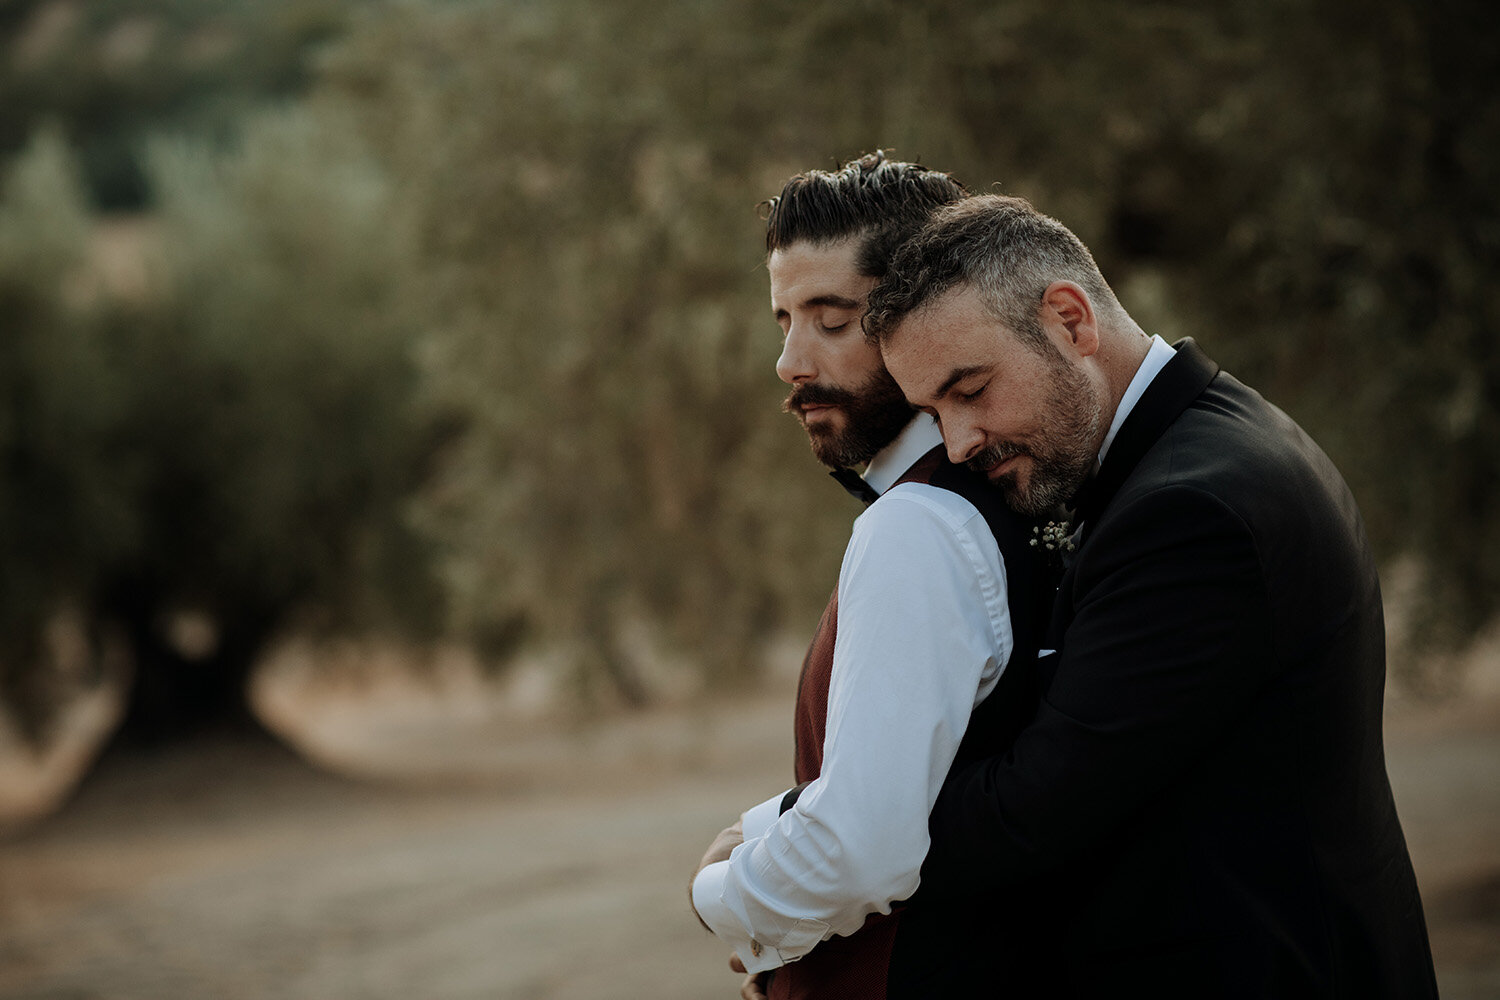 073_Jose_Reyes_boda_pareja_gay_lgtb_wedding_chicos_Zaragoza_Granada_love_forografo_bodas.jpg